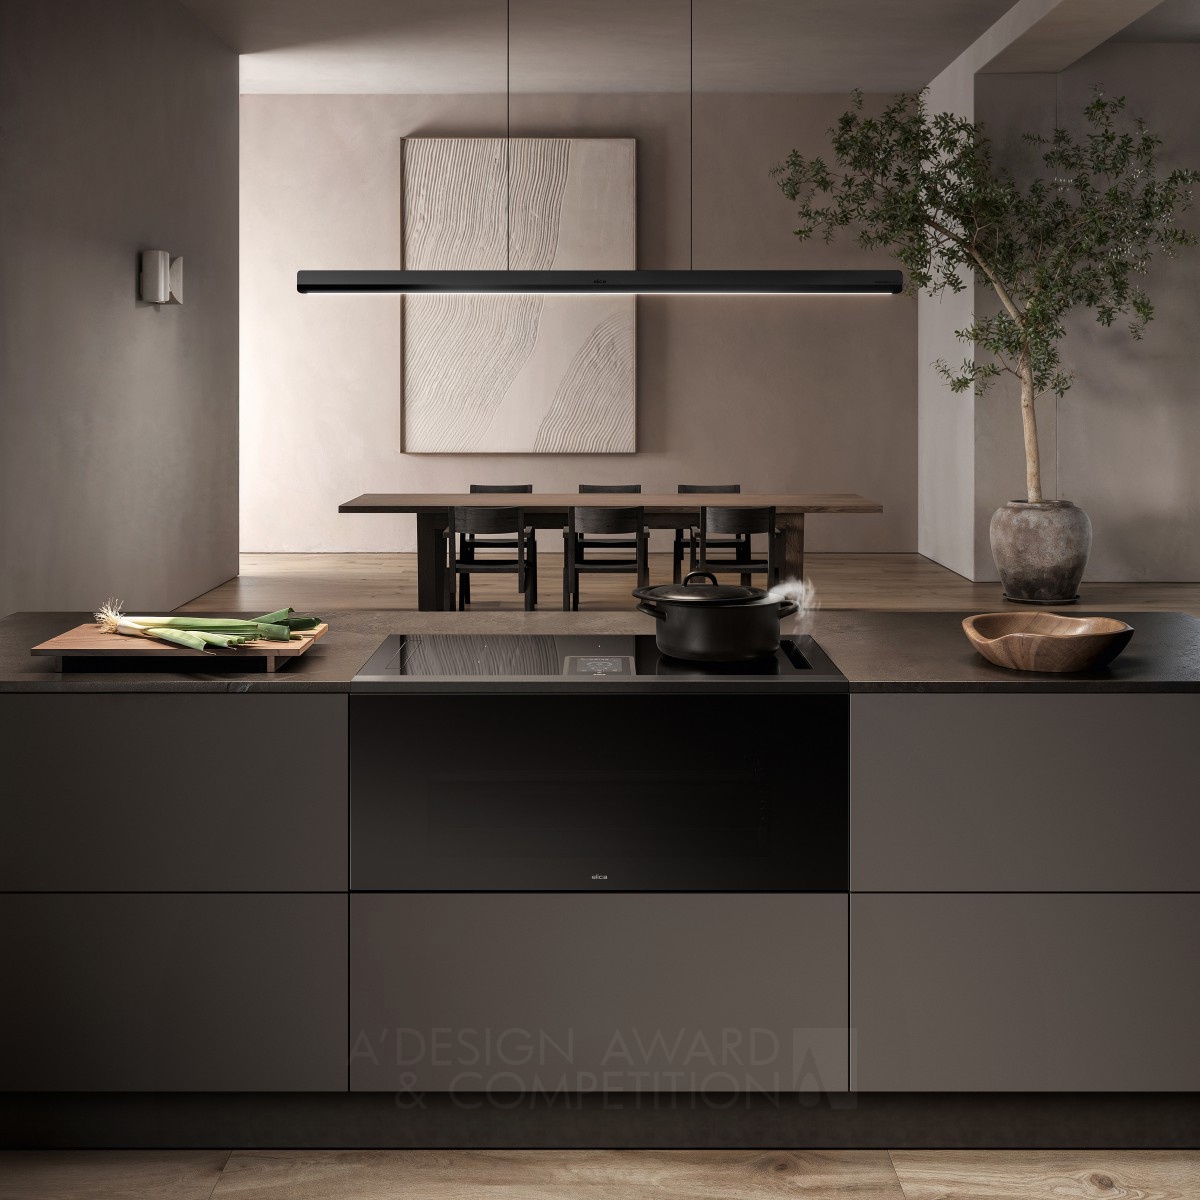 Fabrizio Crisà wins Platinum at the prestigious A' Home Appliances Design Award with Lhov Hob, Hood and Oven .